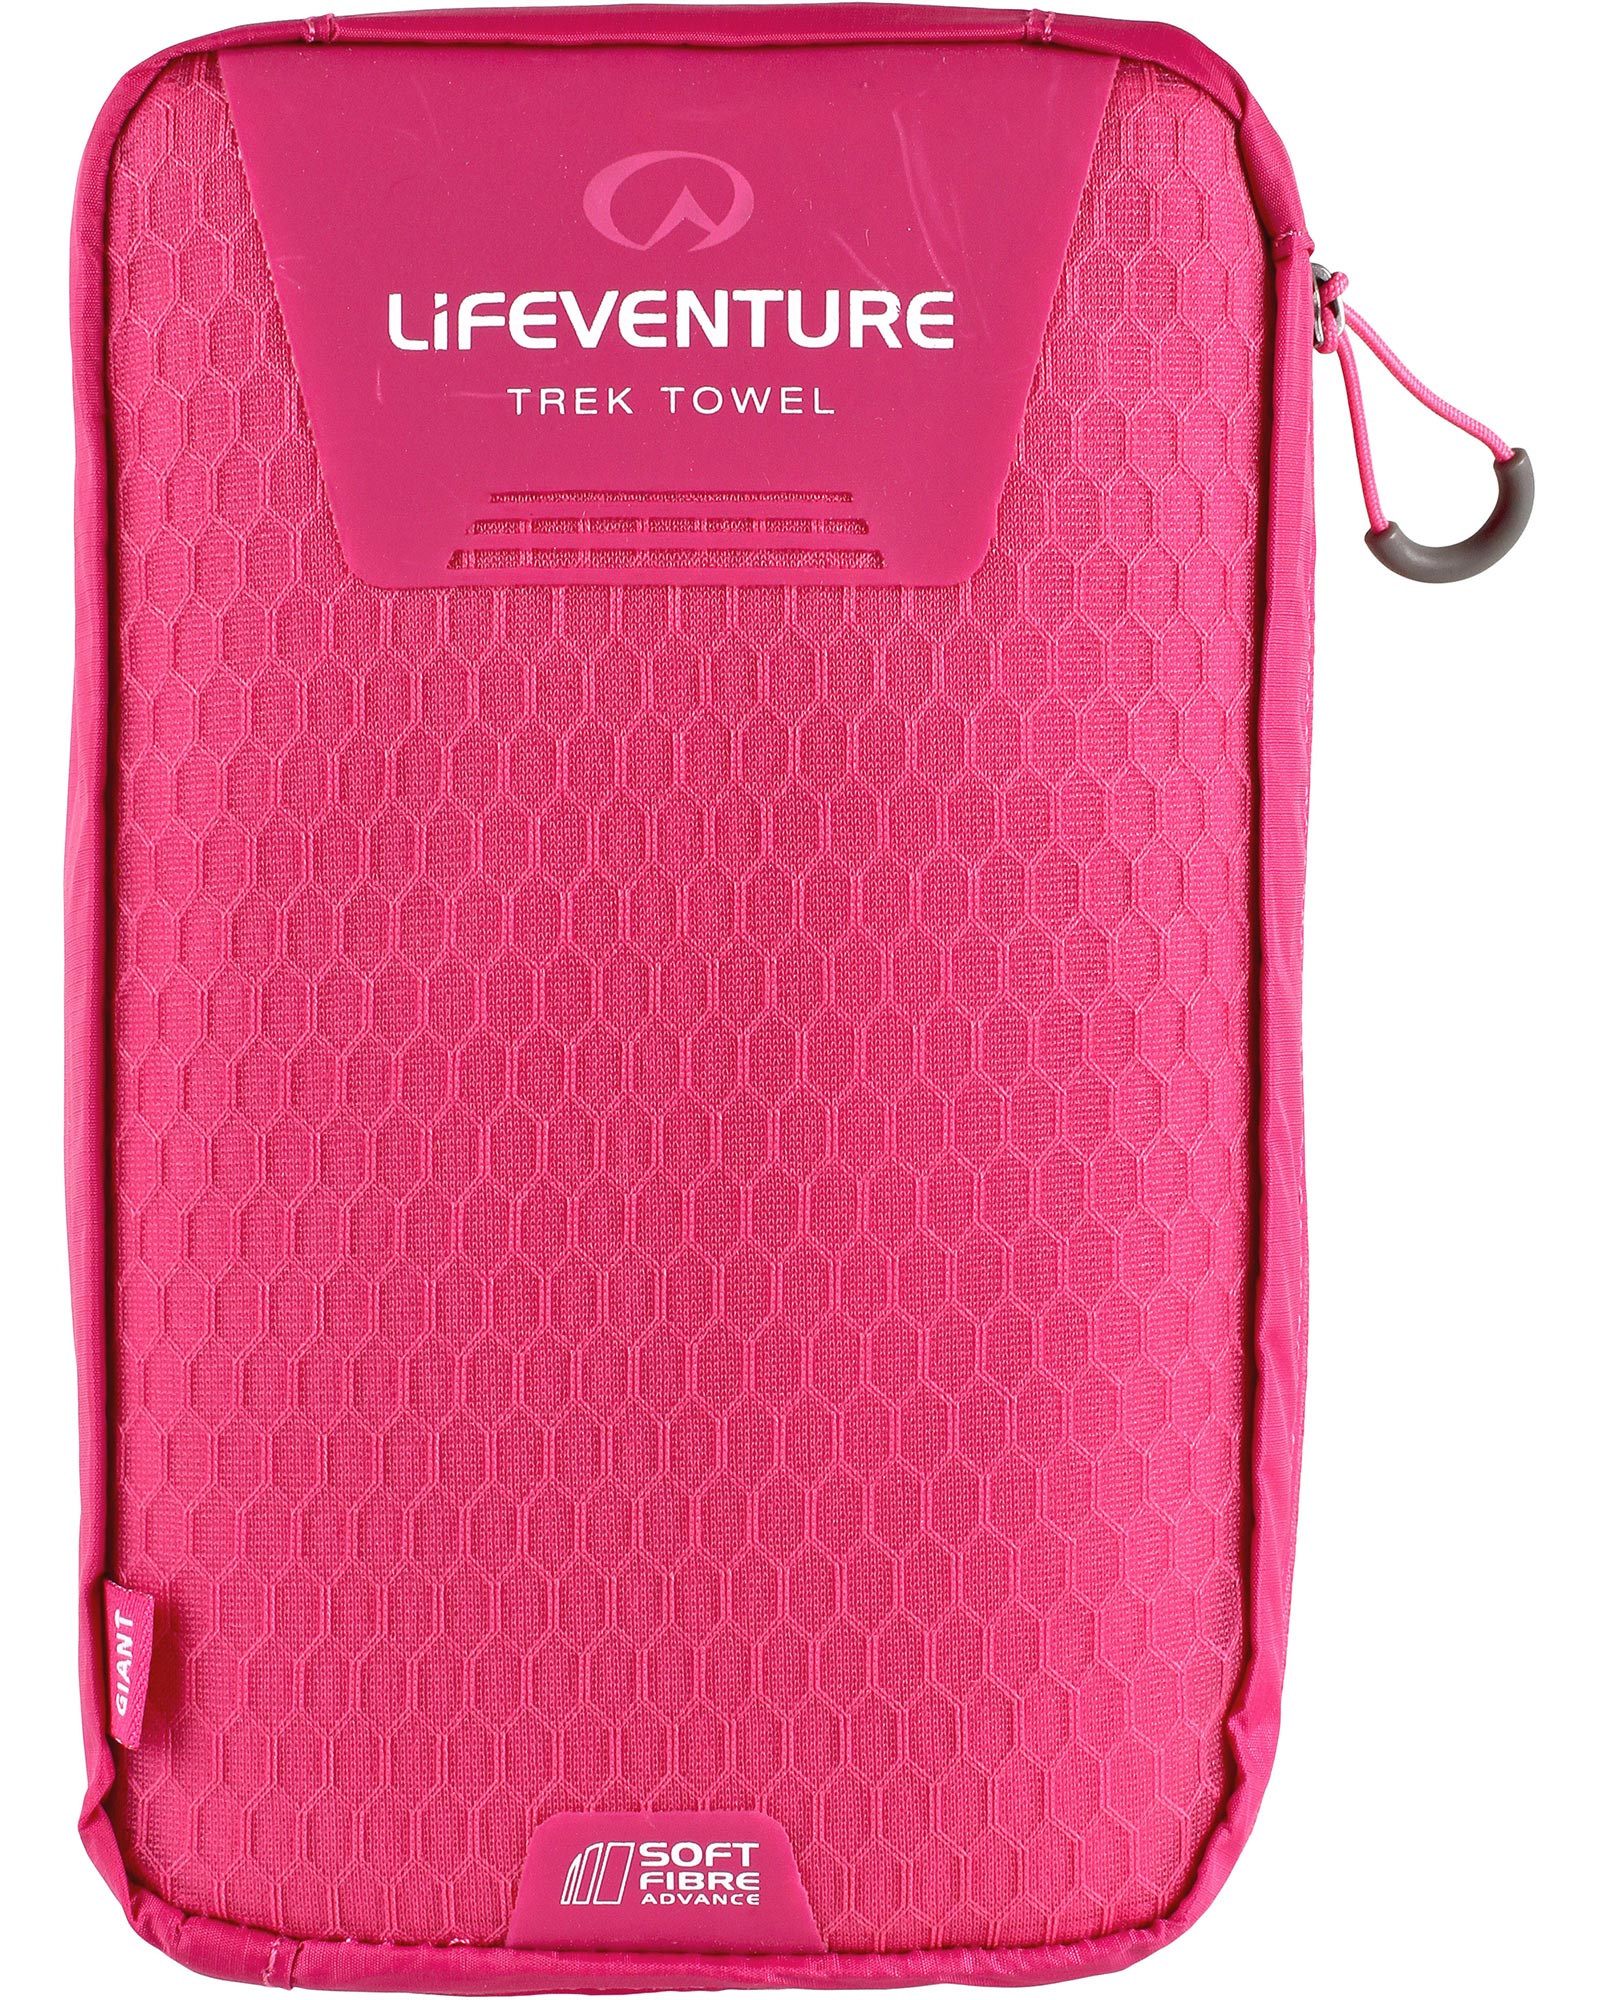 Lifeventure SoftFibre Trek Towel   Giant - Pink